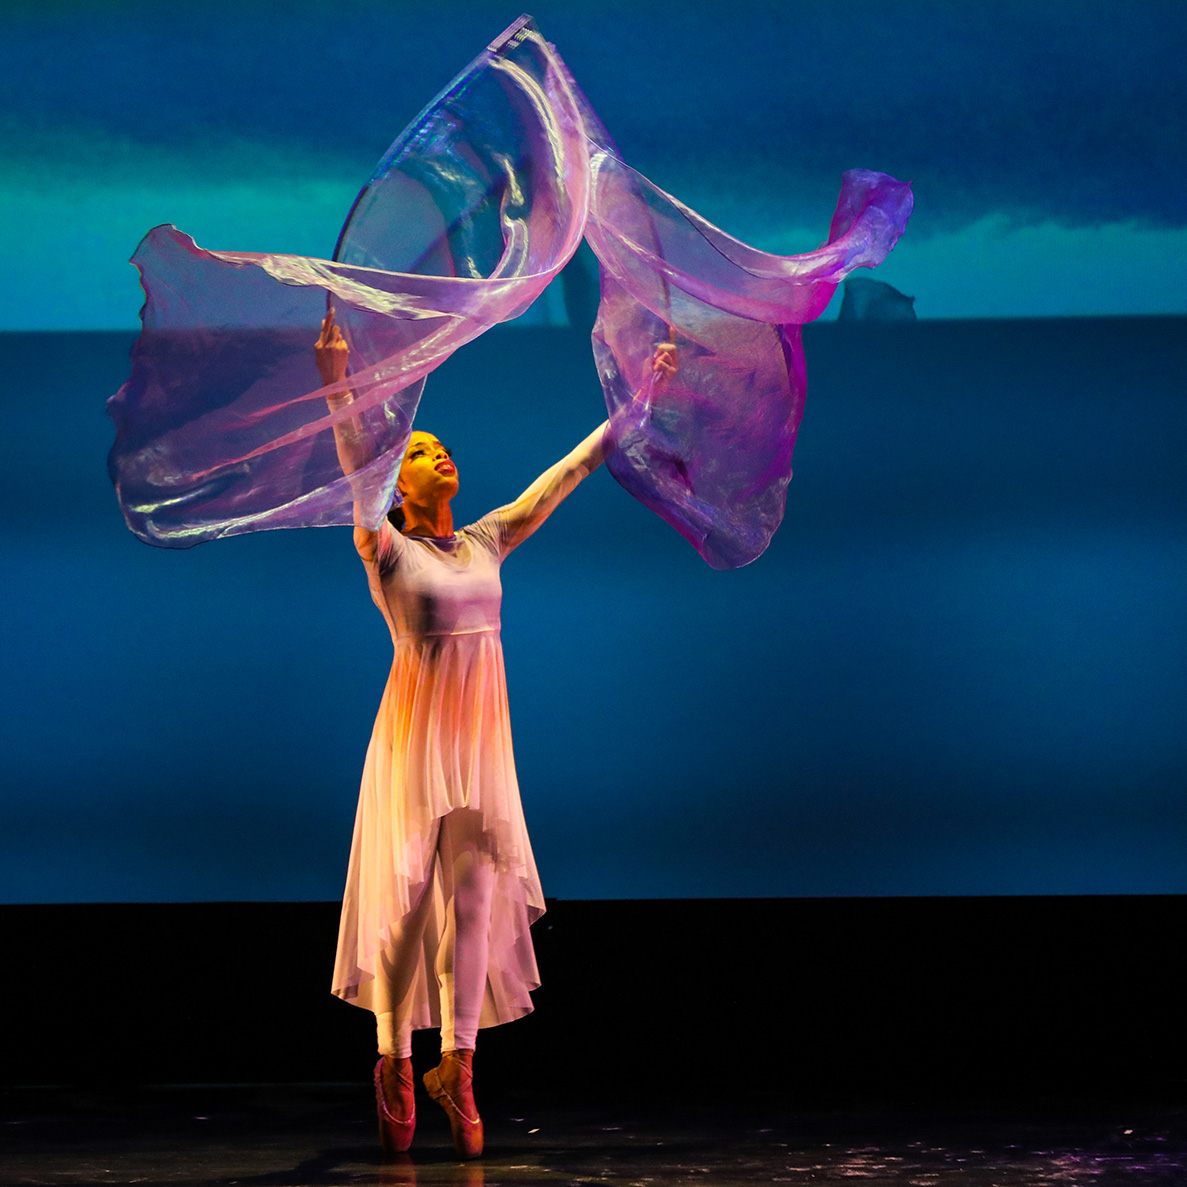 dancer twirling purple silks on stage.